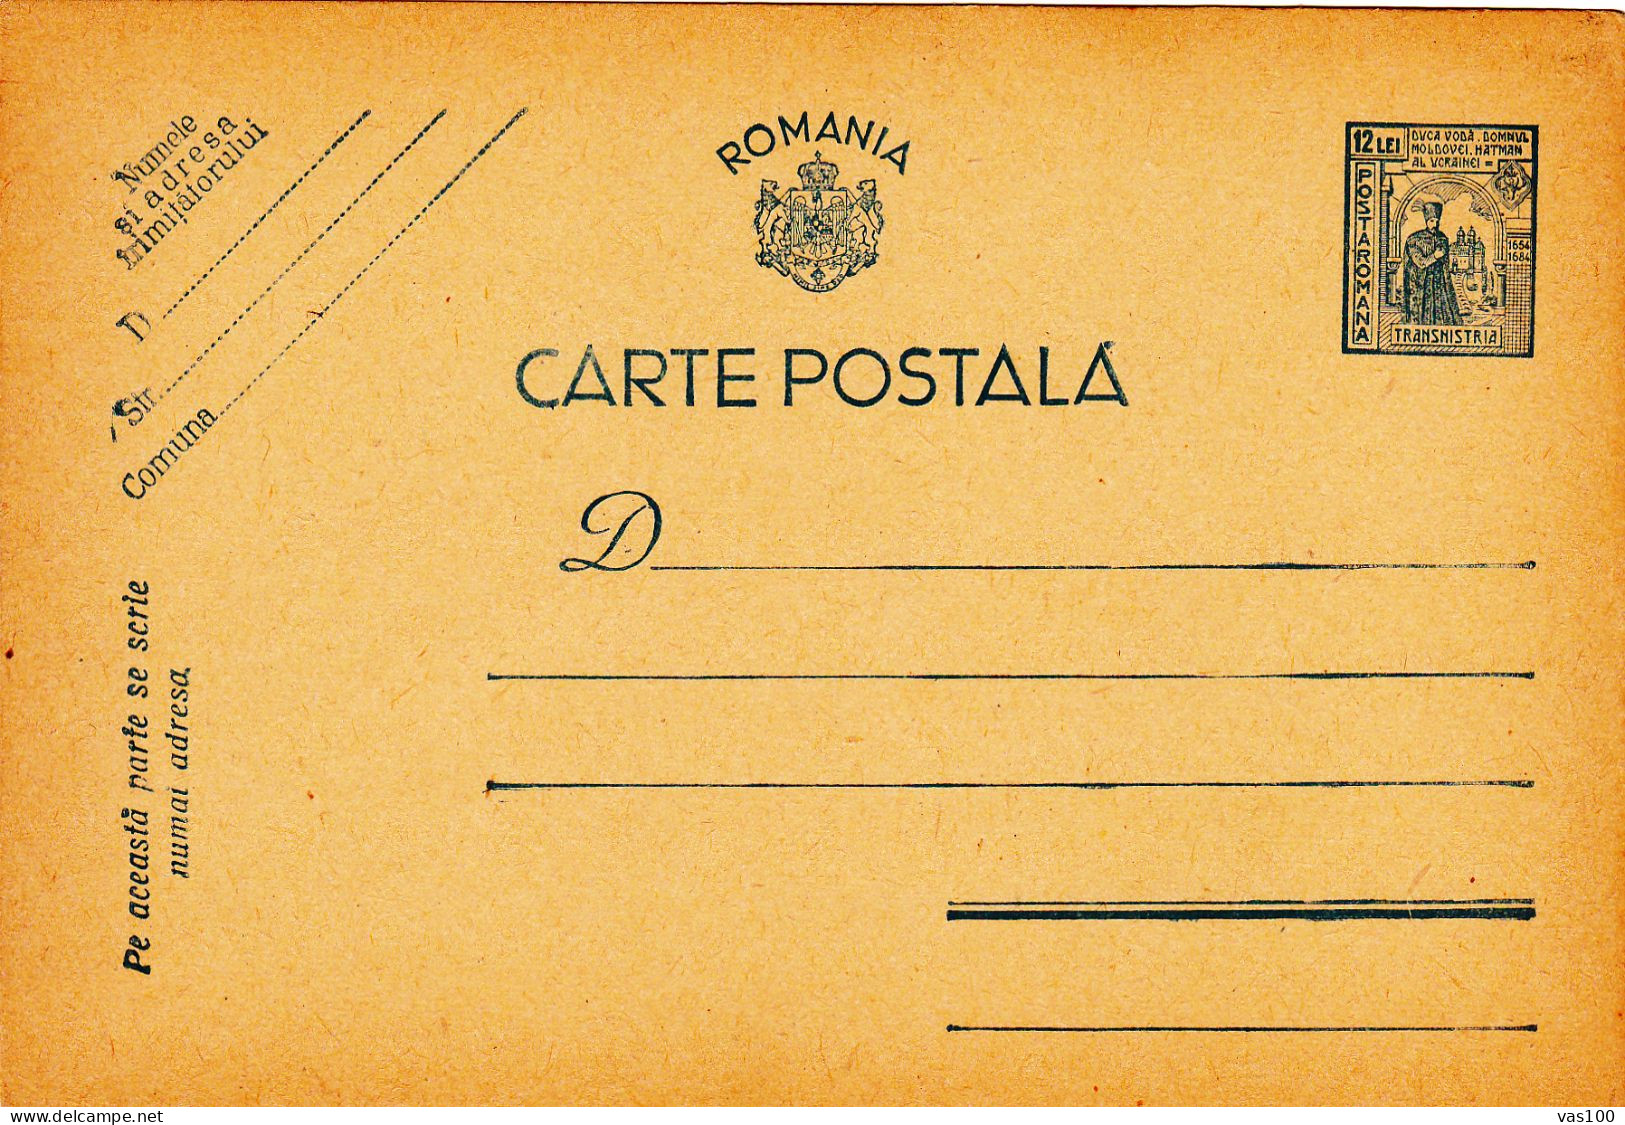 ROUMANIE / TRANSNISTRIE - ROMANIA / TRANSNISTRIA 1943, POSTCARD STATIONERY UNUSED,ROMANIA. - Storia Postale